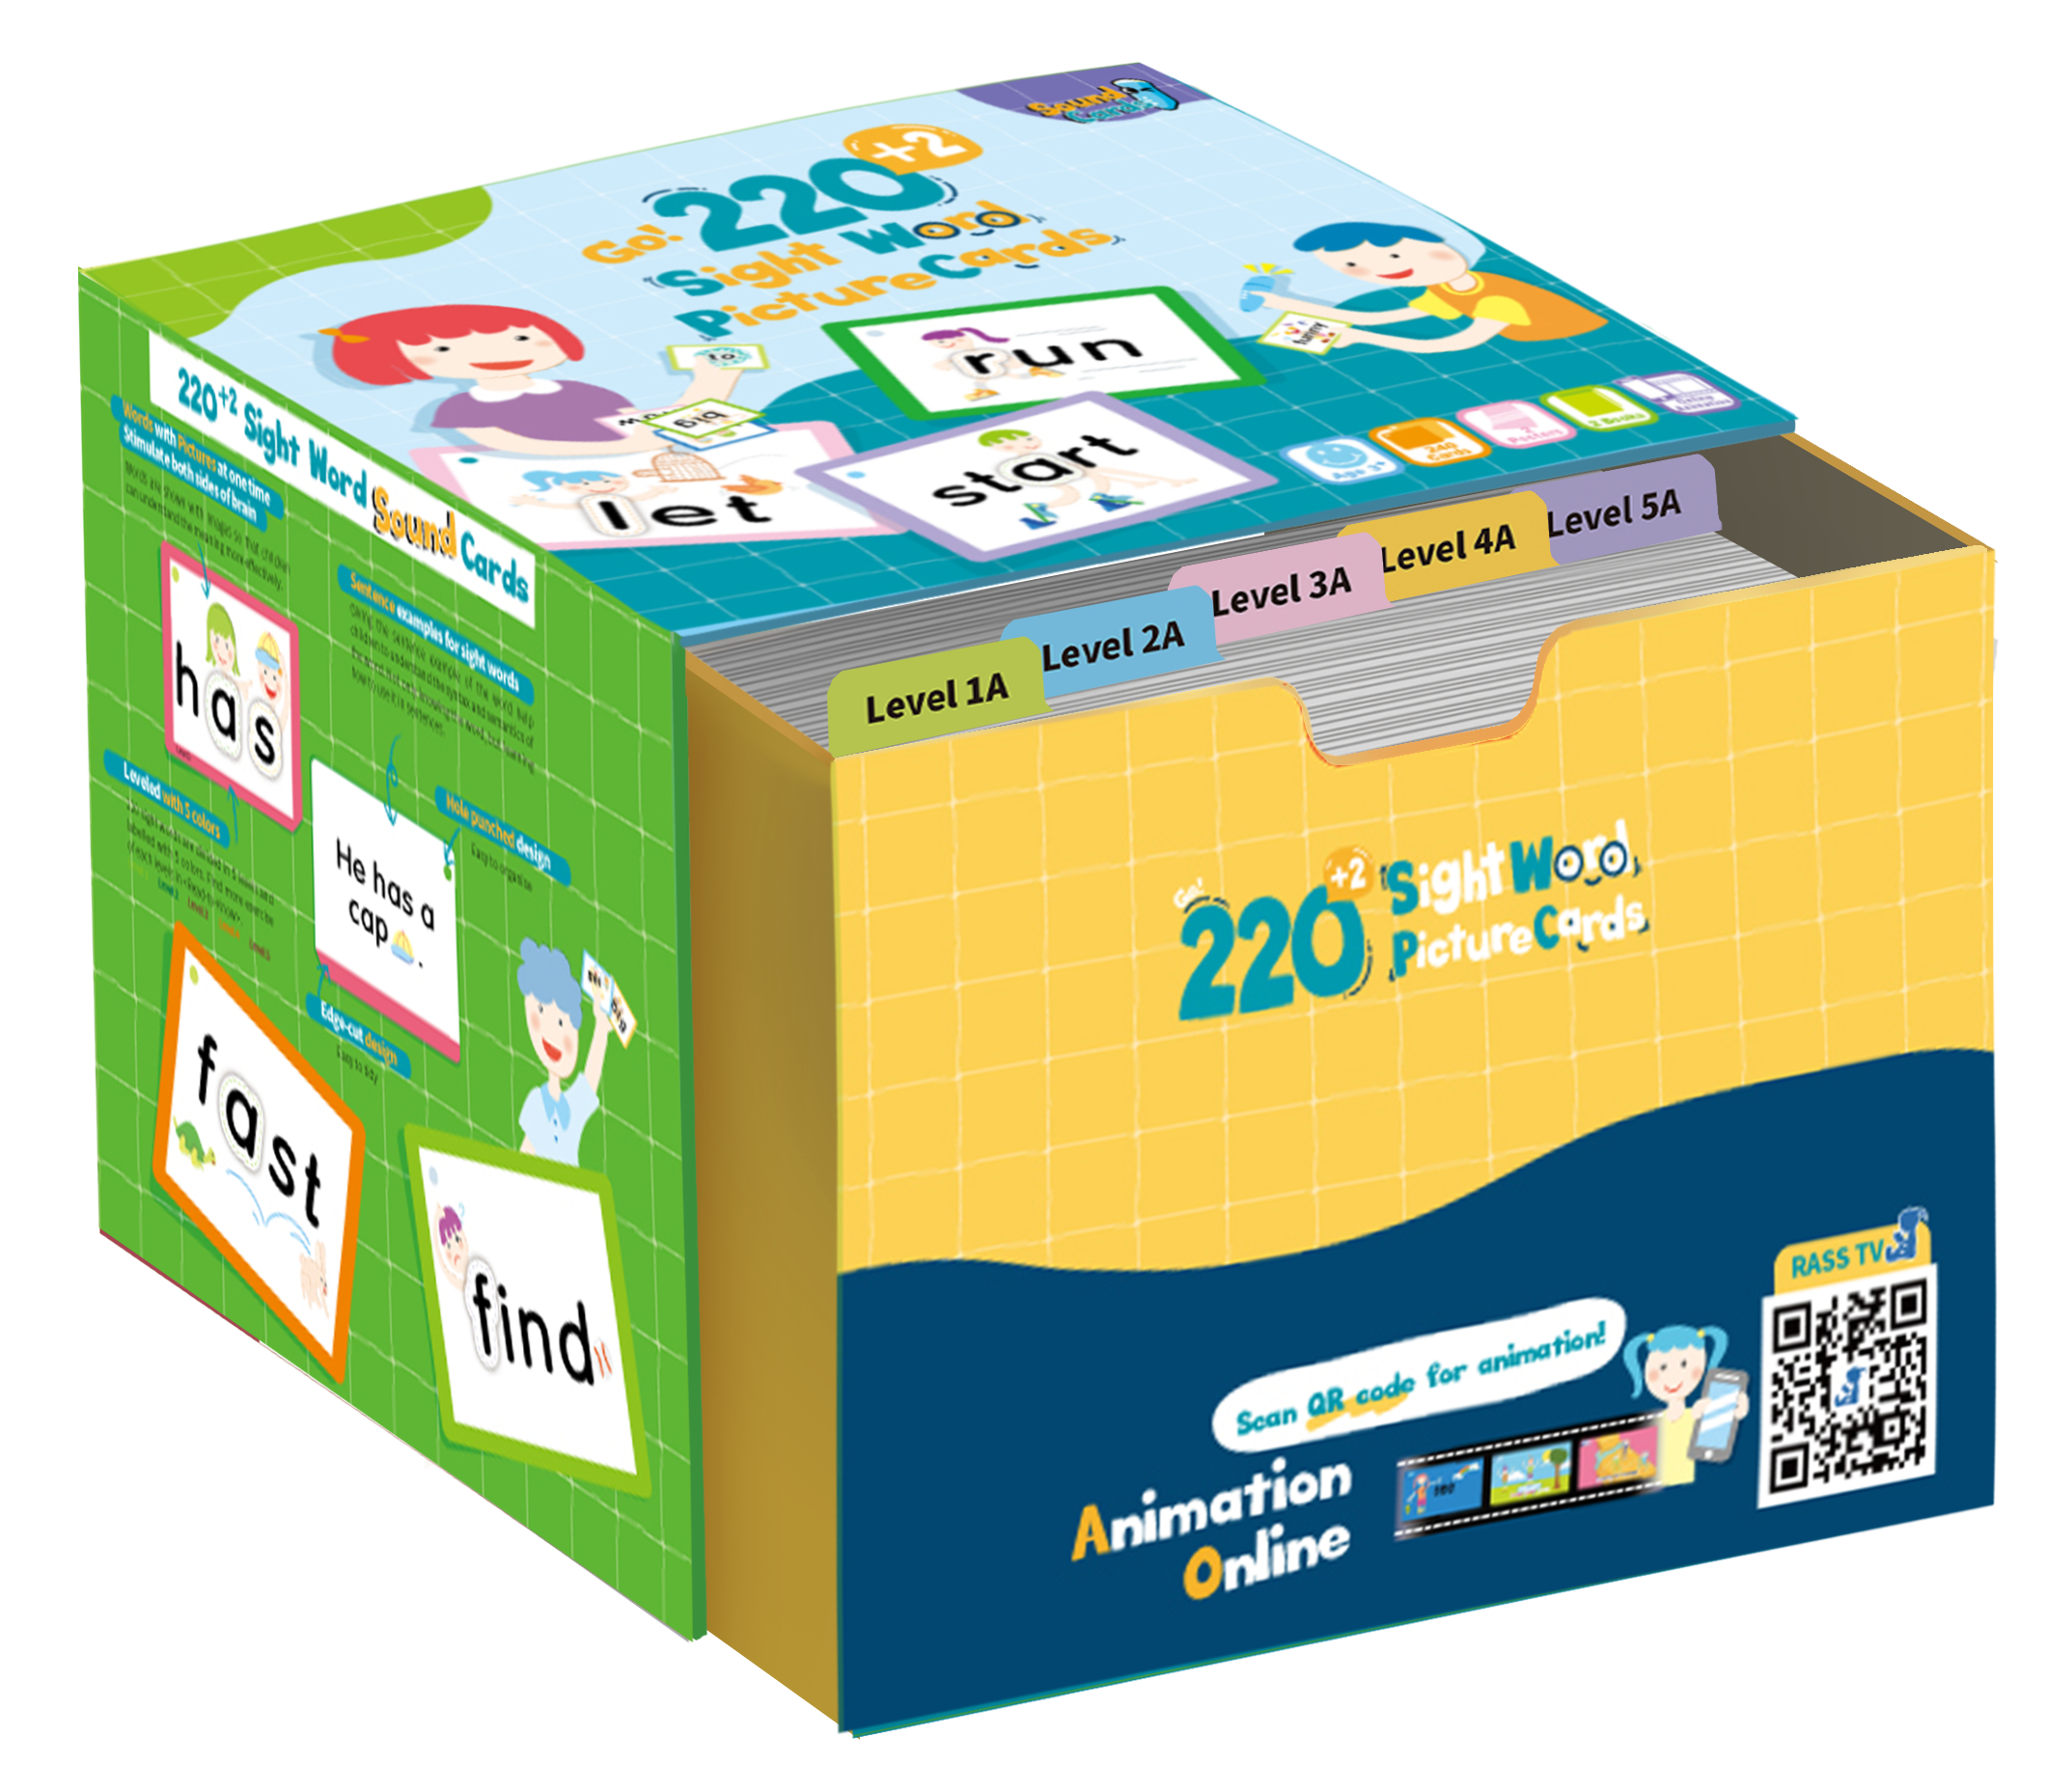 2023年全新點讀字卡 Go! 220+2 Sight Word Picture Cards  免費順豐送貨